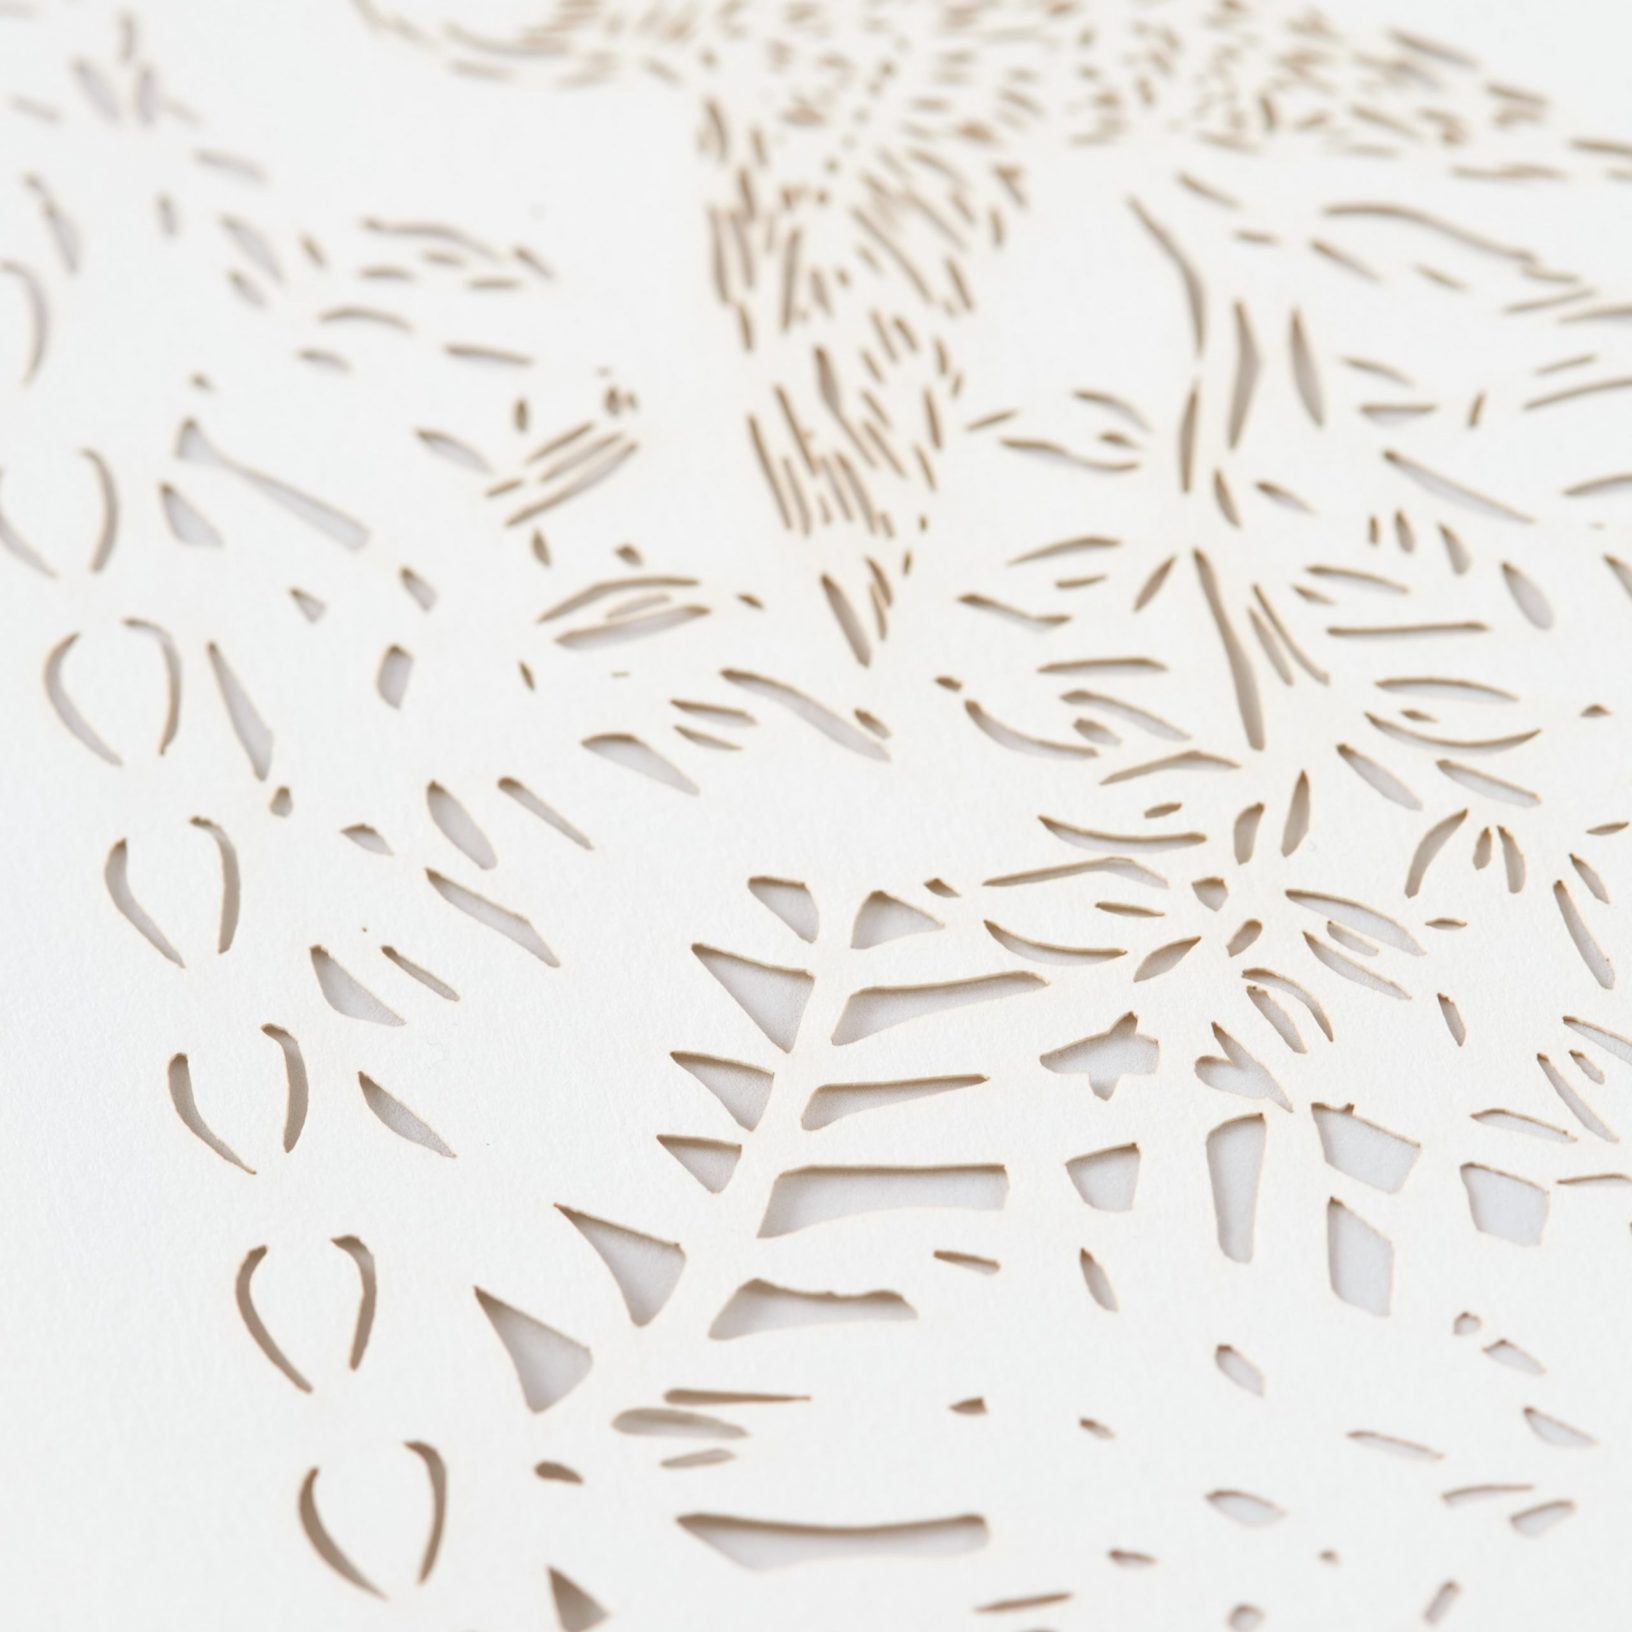 Hummingbird Harmony Papercut Ketubah Toronto by Tziona Brauner